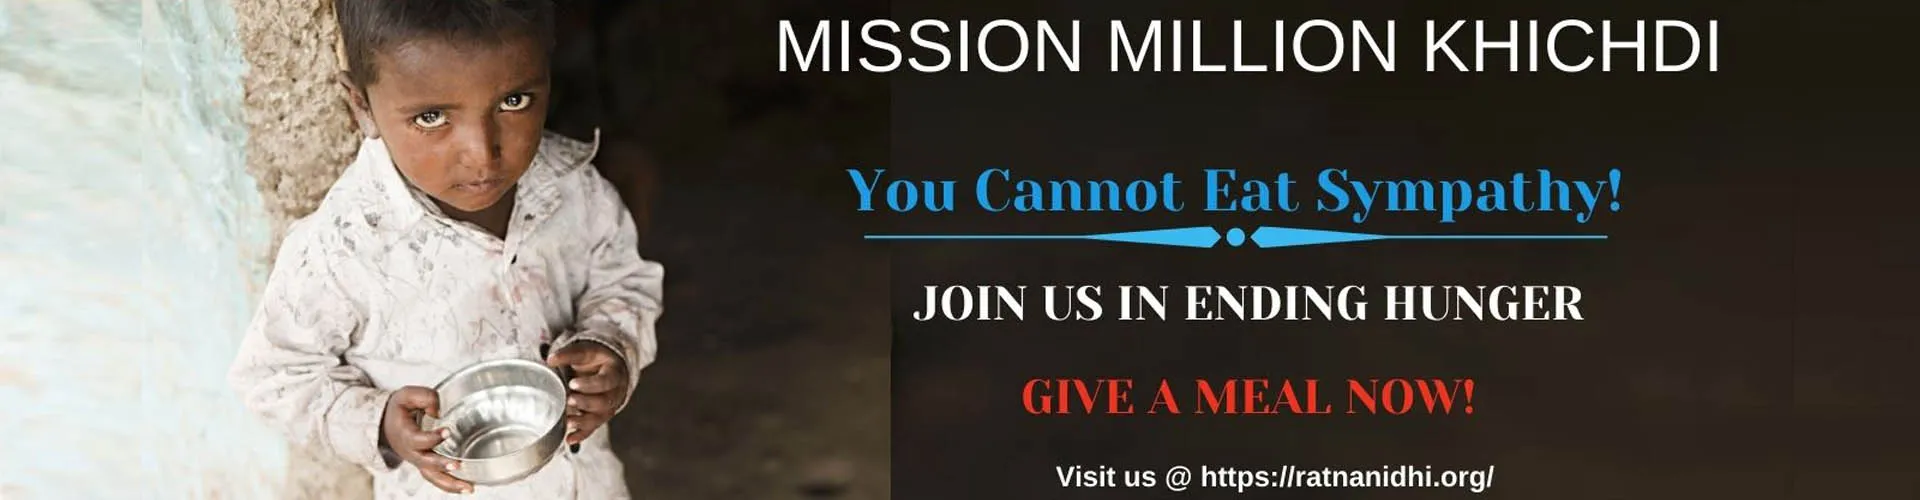 Mission Million Khichdi - Cannot eat sympathy